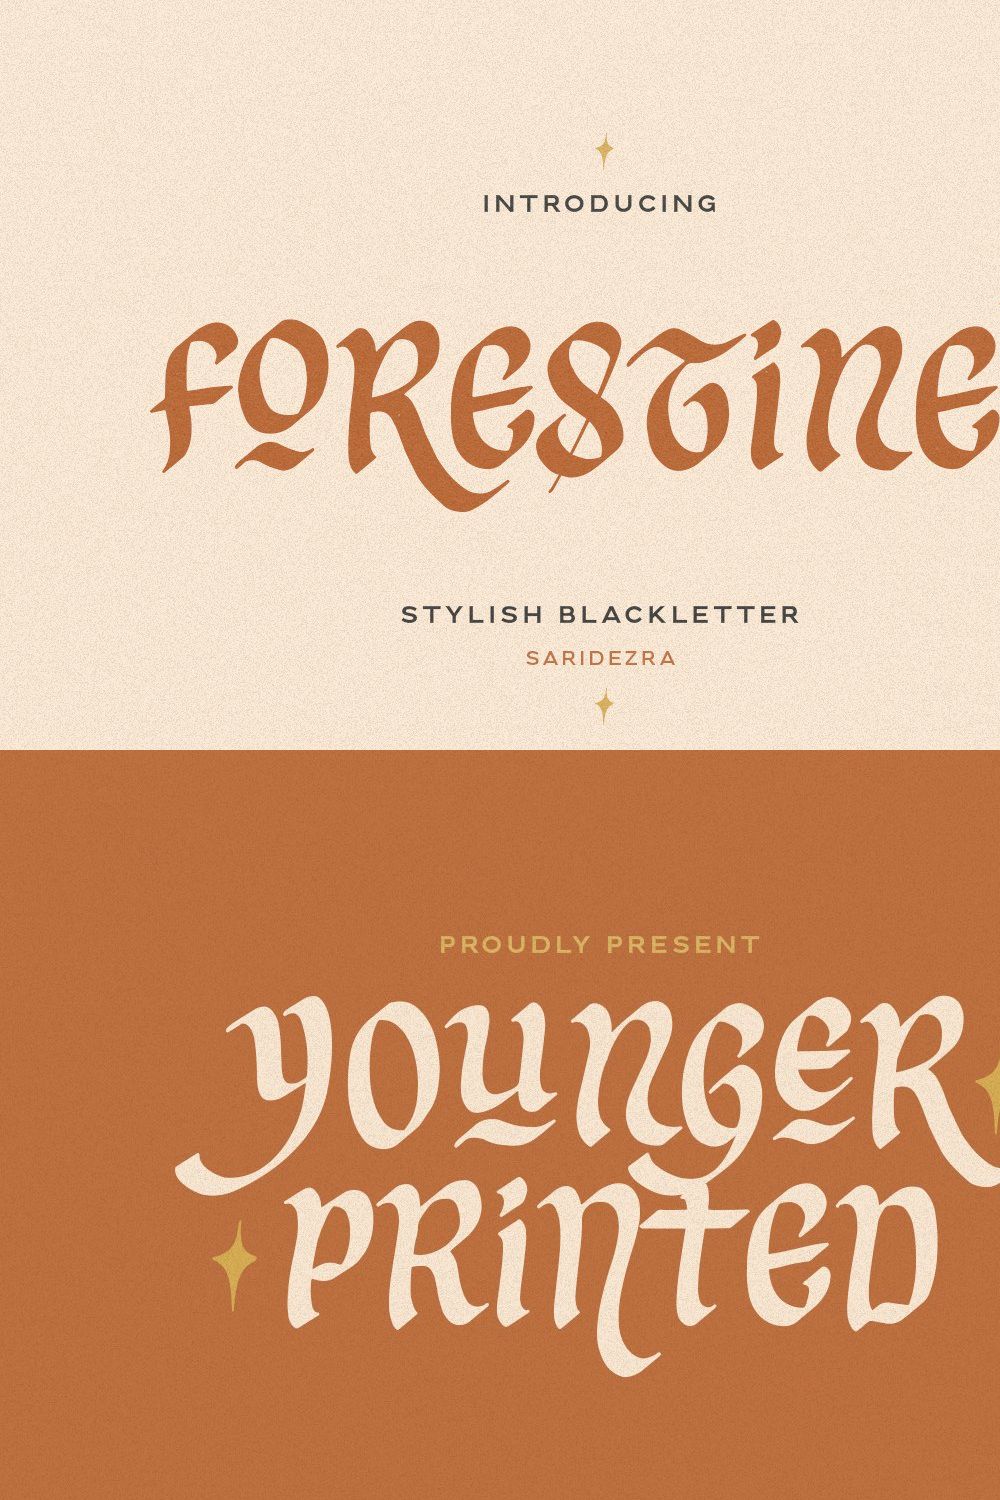 Forestine - Stylish Blackletter pinterest preview image.